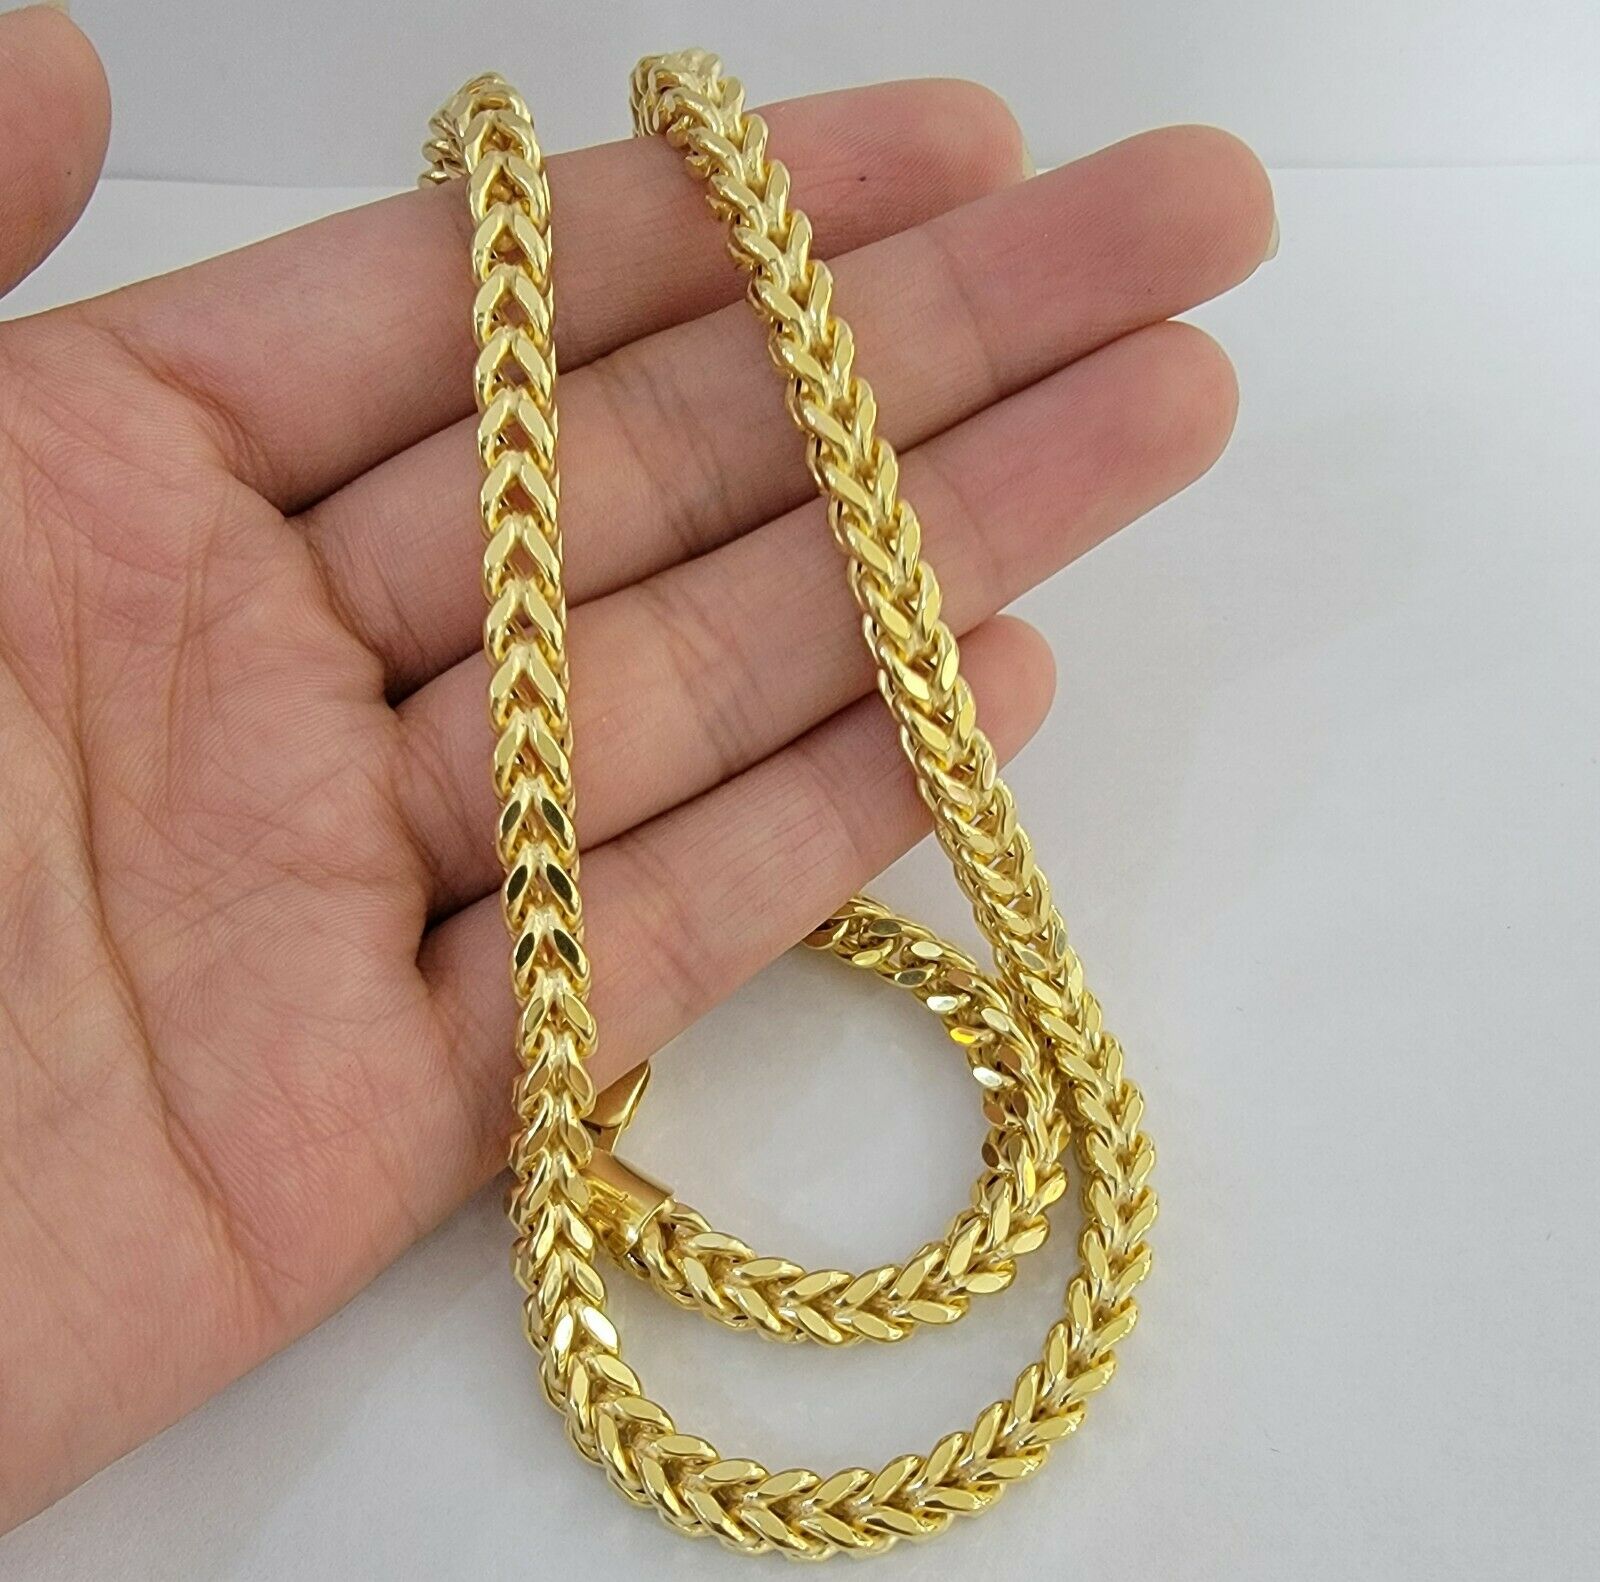 10K Gold Franco Link Chain 22